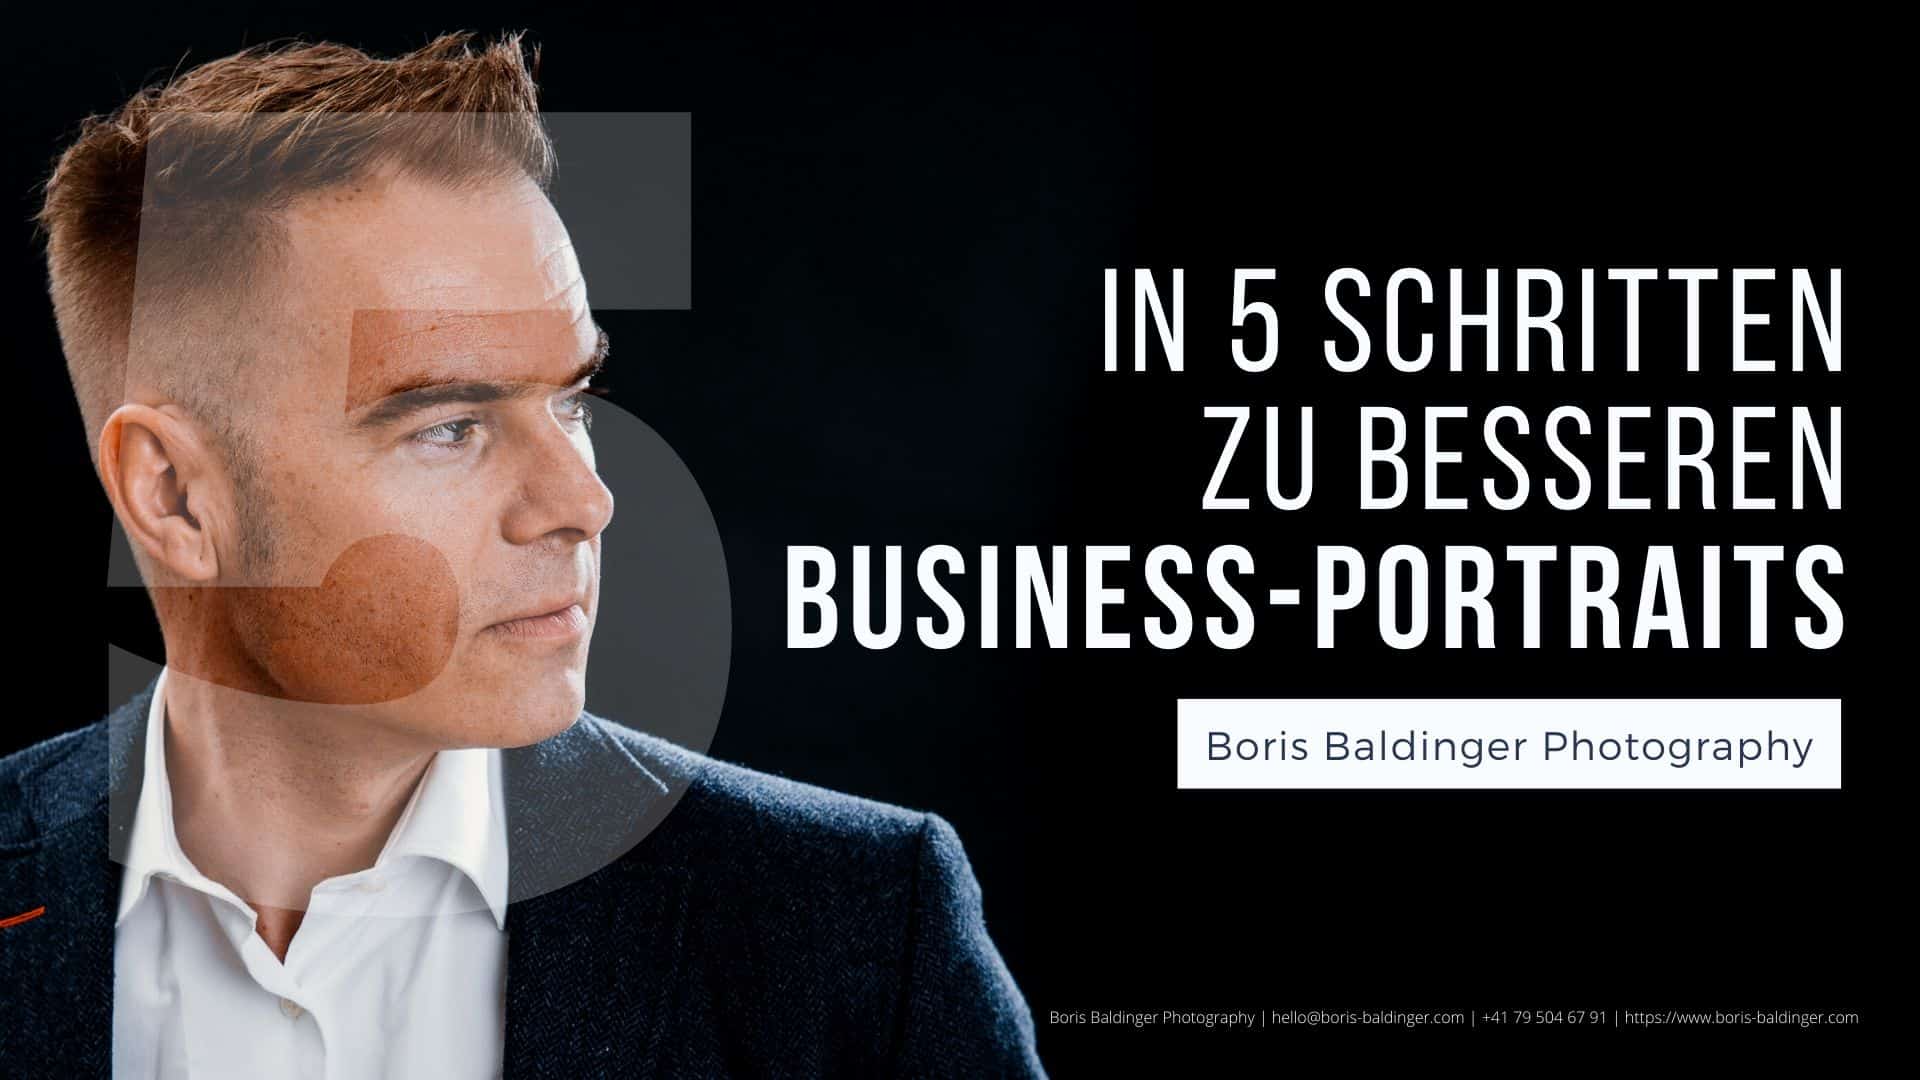 Boris Baldinger - In 5 Schritten zu besseren Business-Portraits